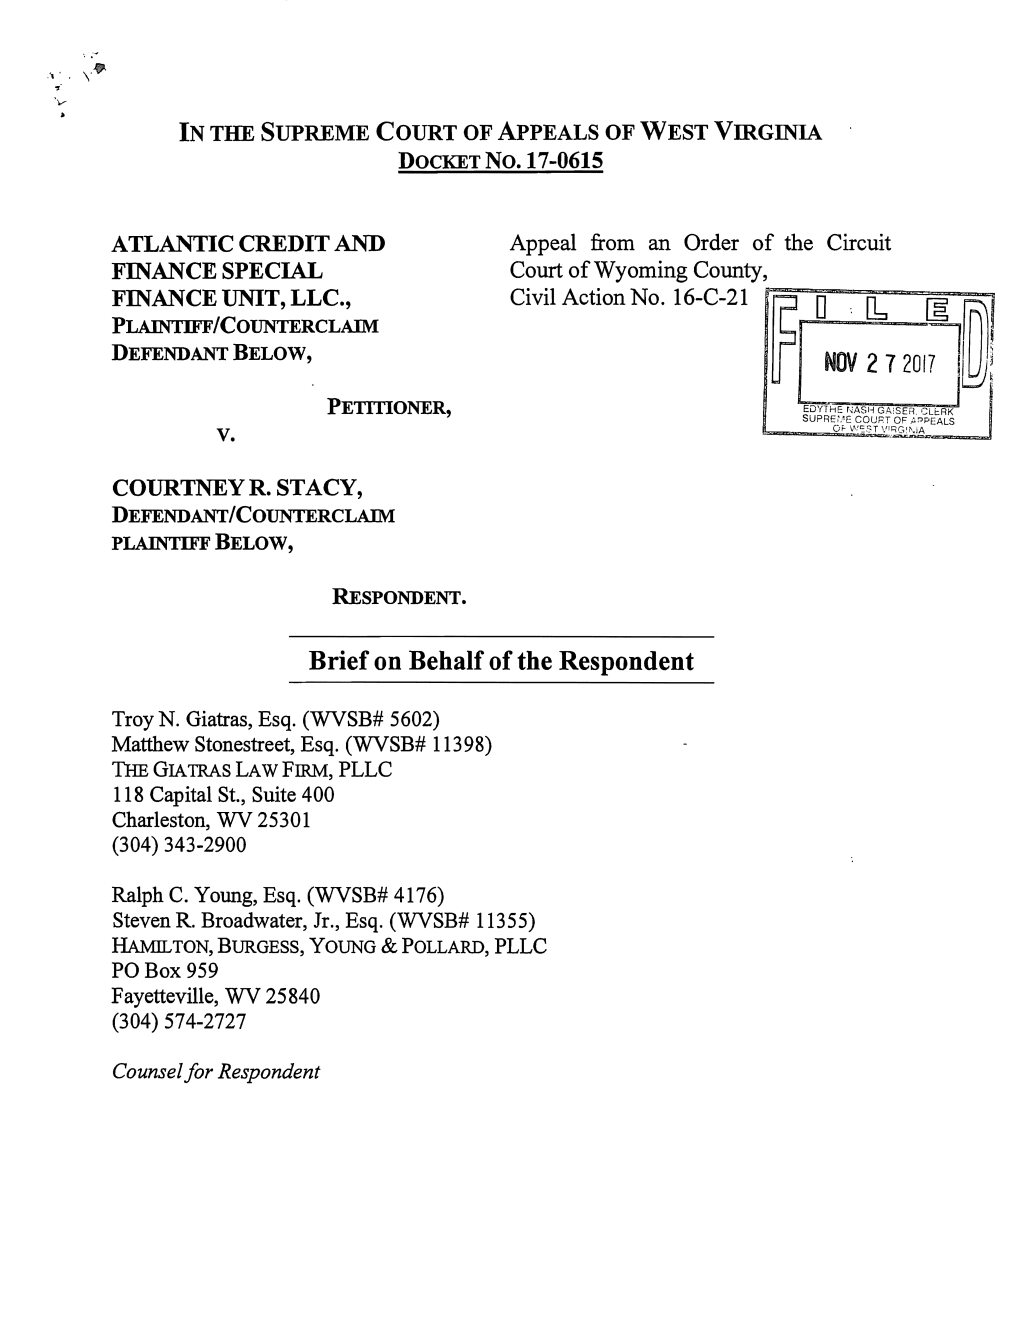 Respondent's Brief, Atlantic Credit & Finance V. Courtney Stacy, No. 17-0615